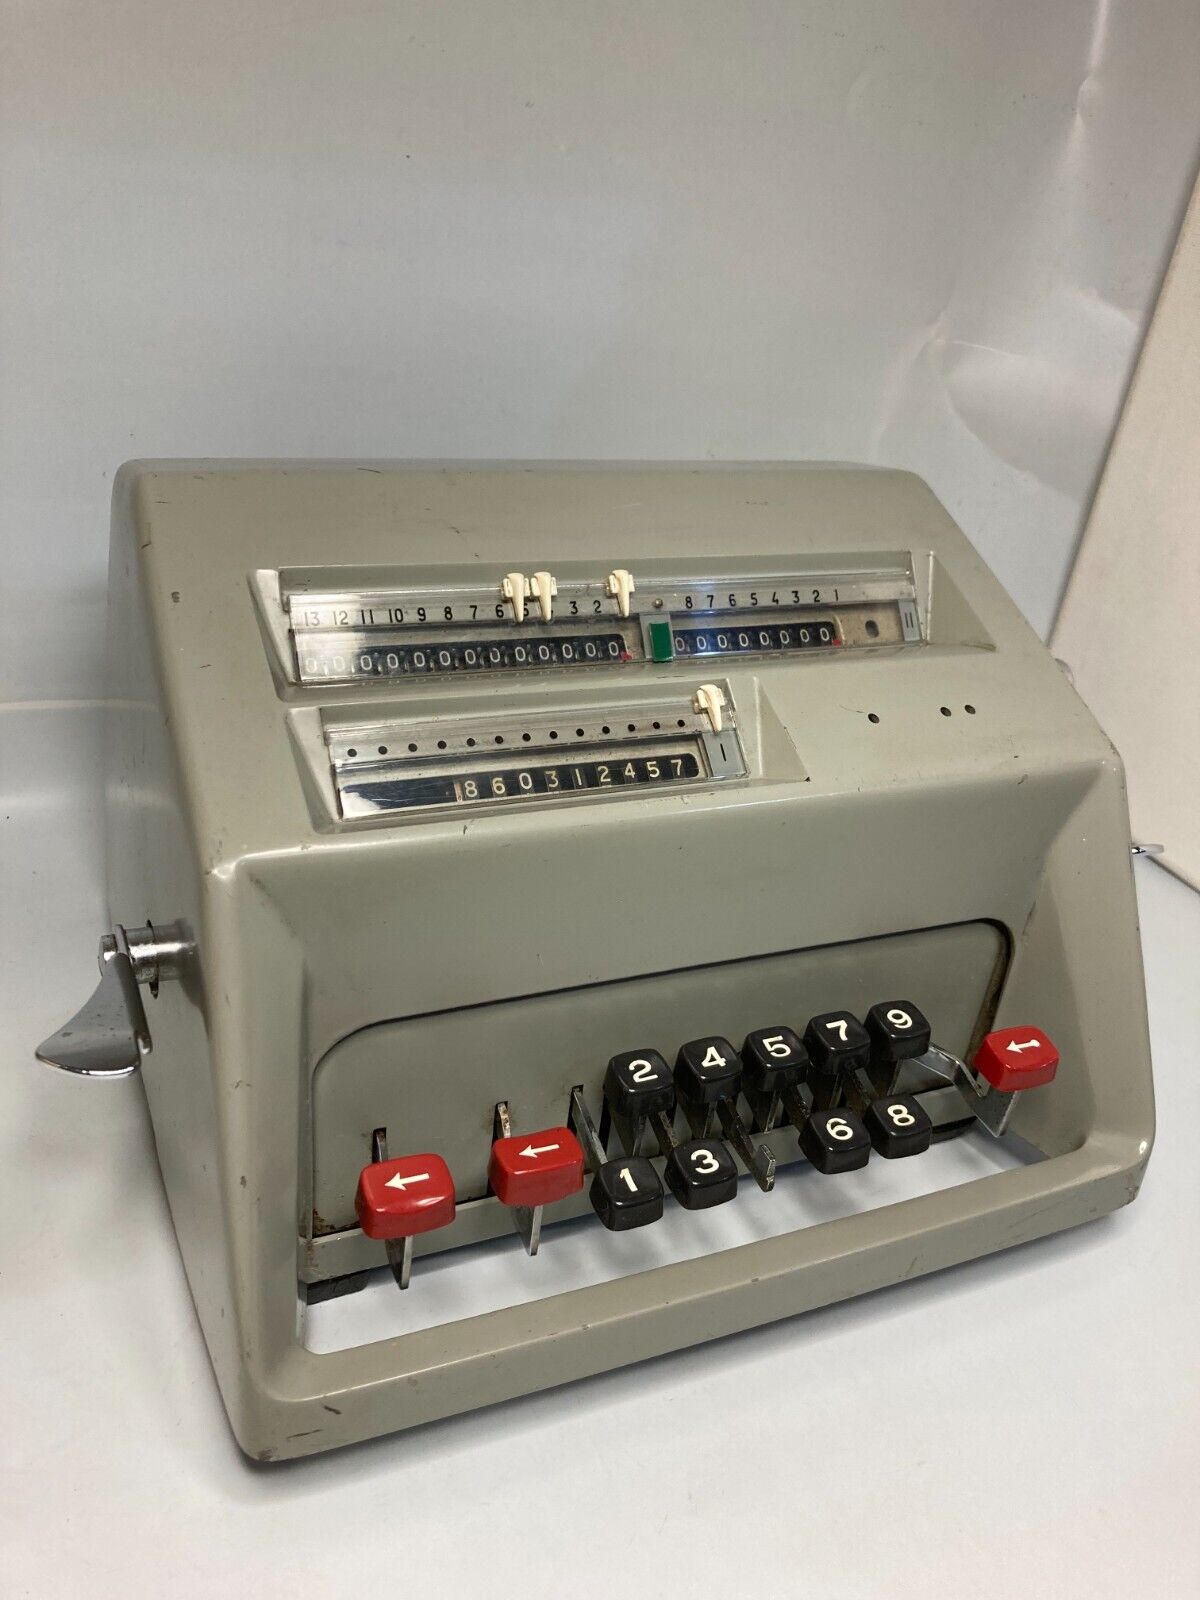 Vintage 1960's Facit Mechanical Calculator Model C1-13 - In Working Order